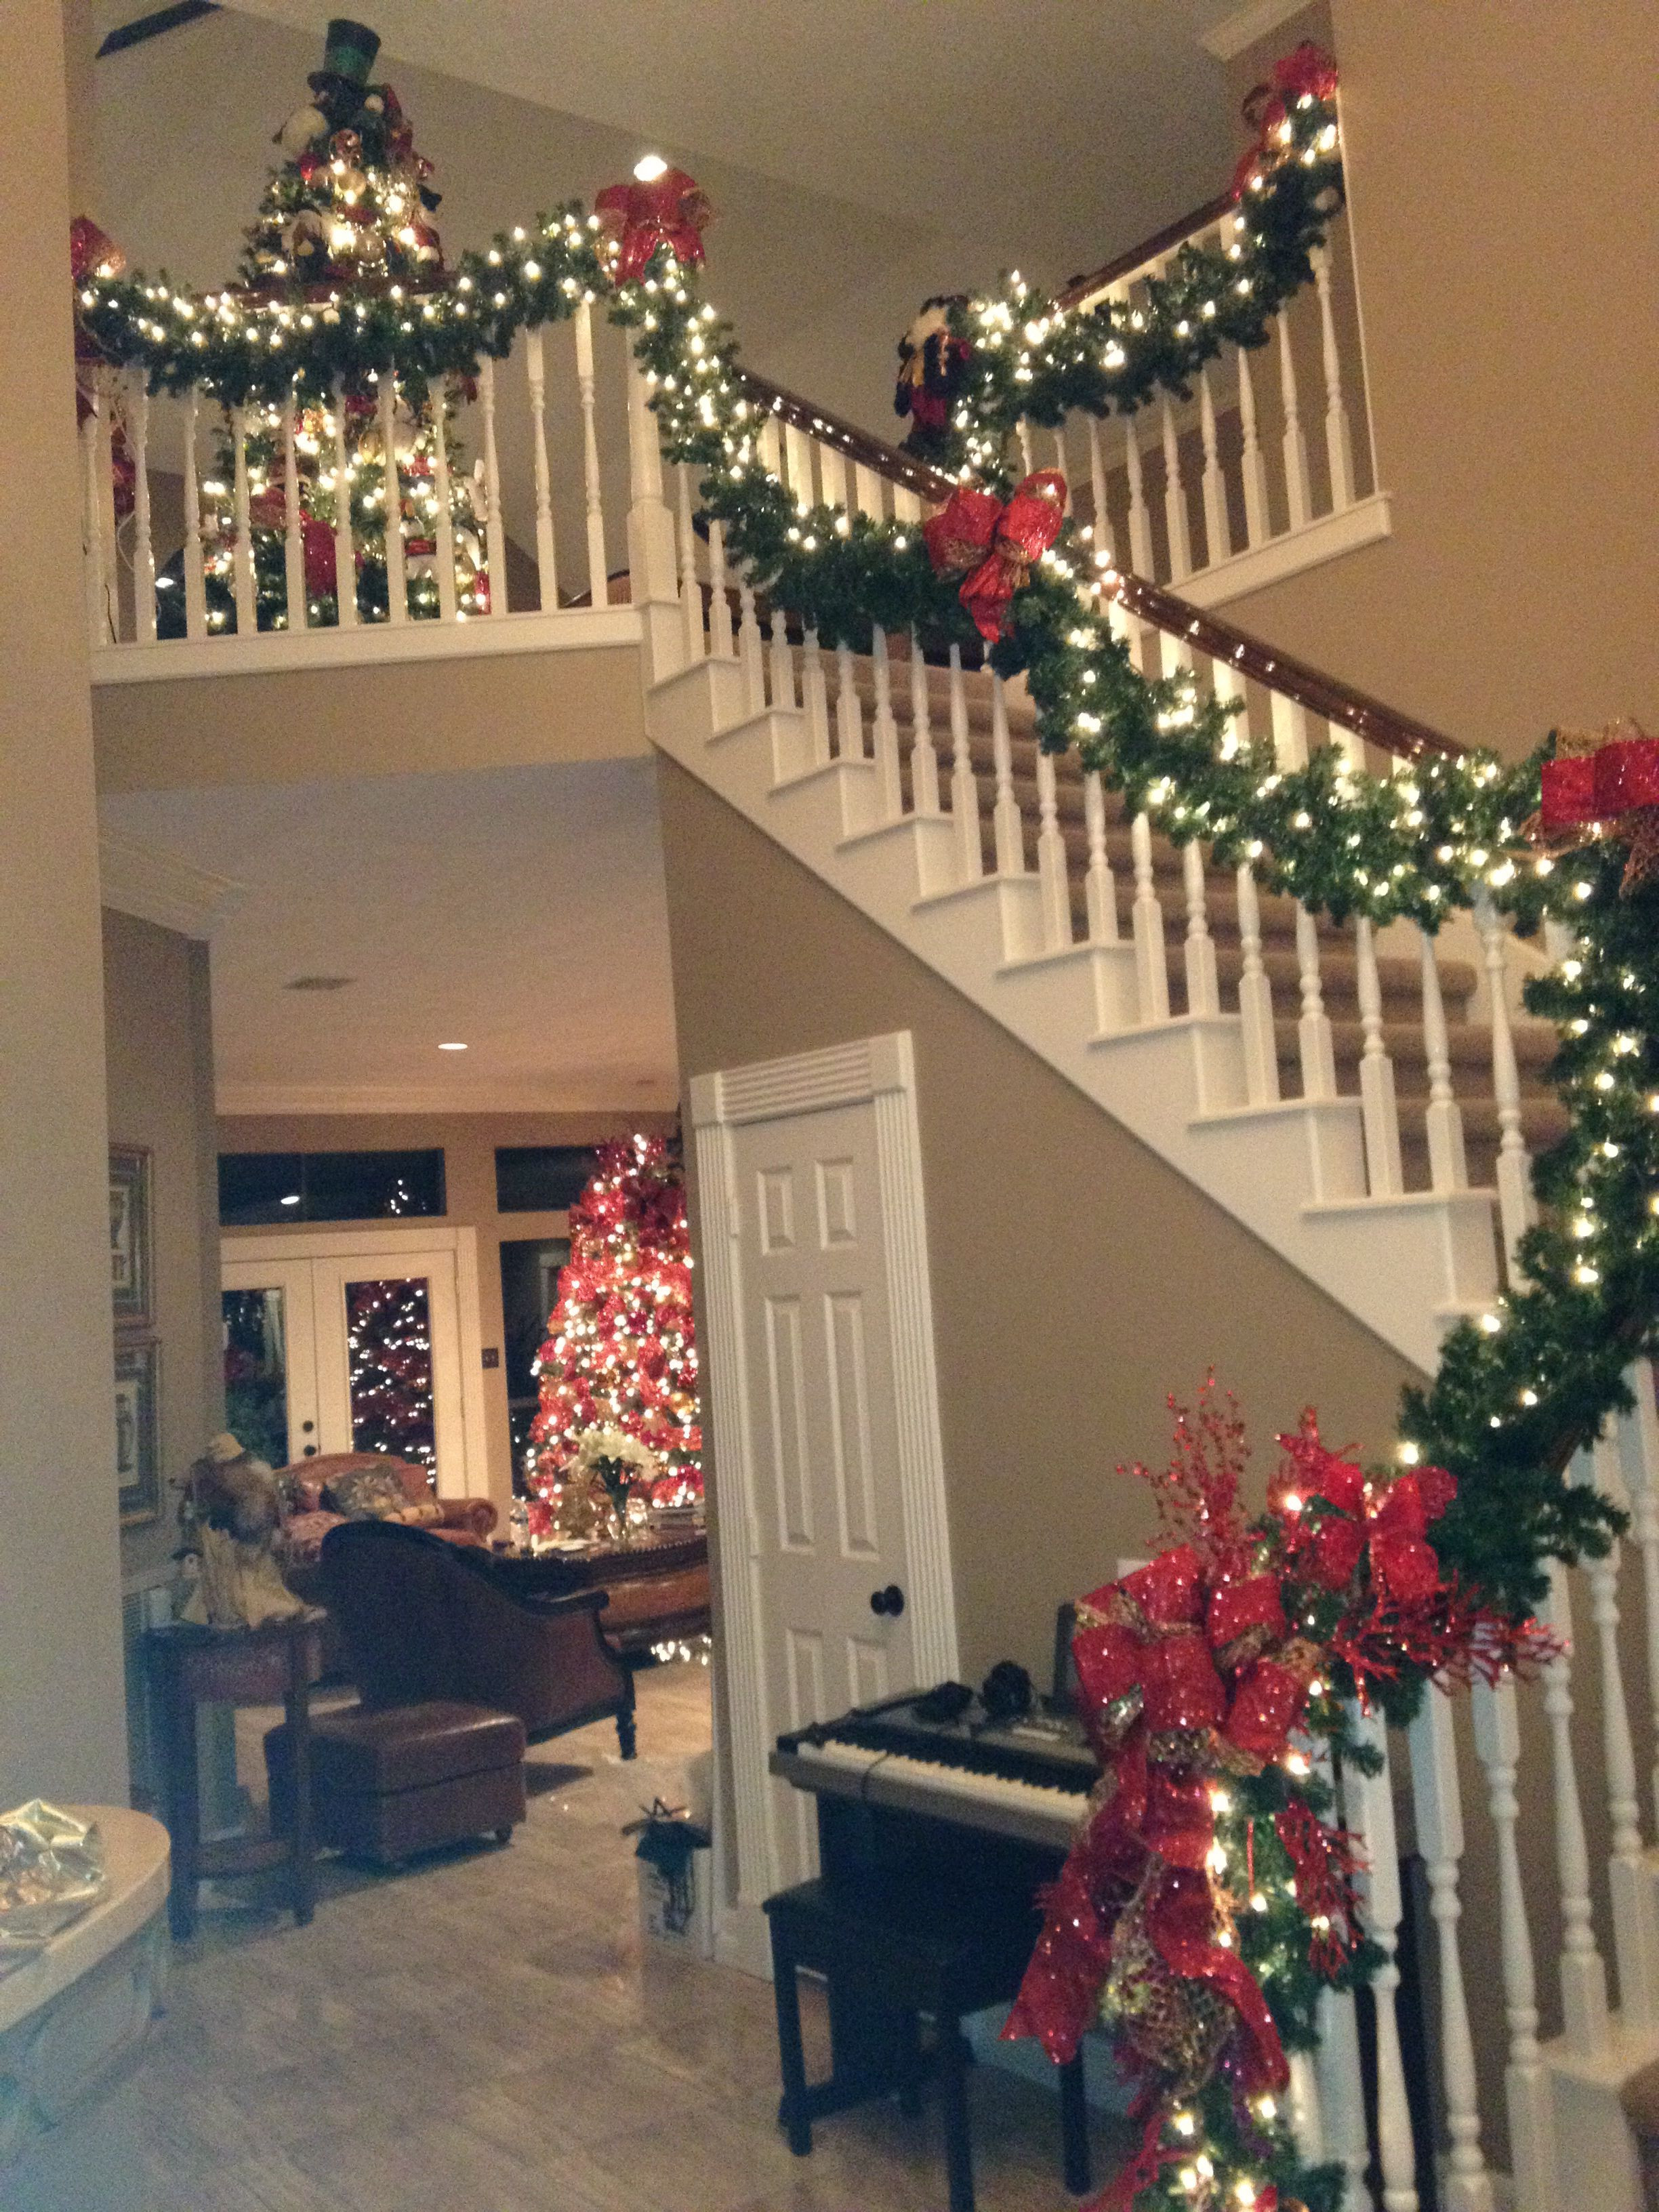 Staircase Christmas Decorating Ideas
 Wrap it Design Holiday Decor Pinterest